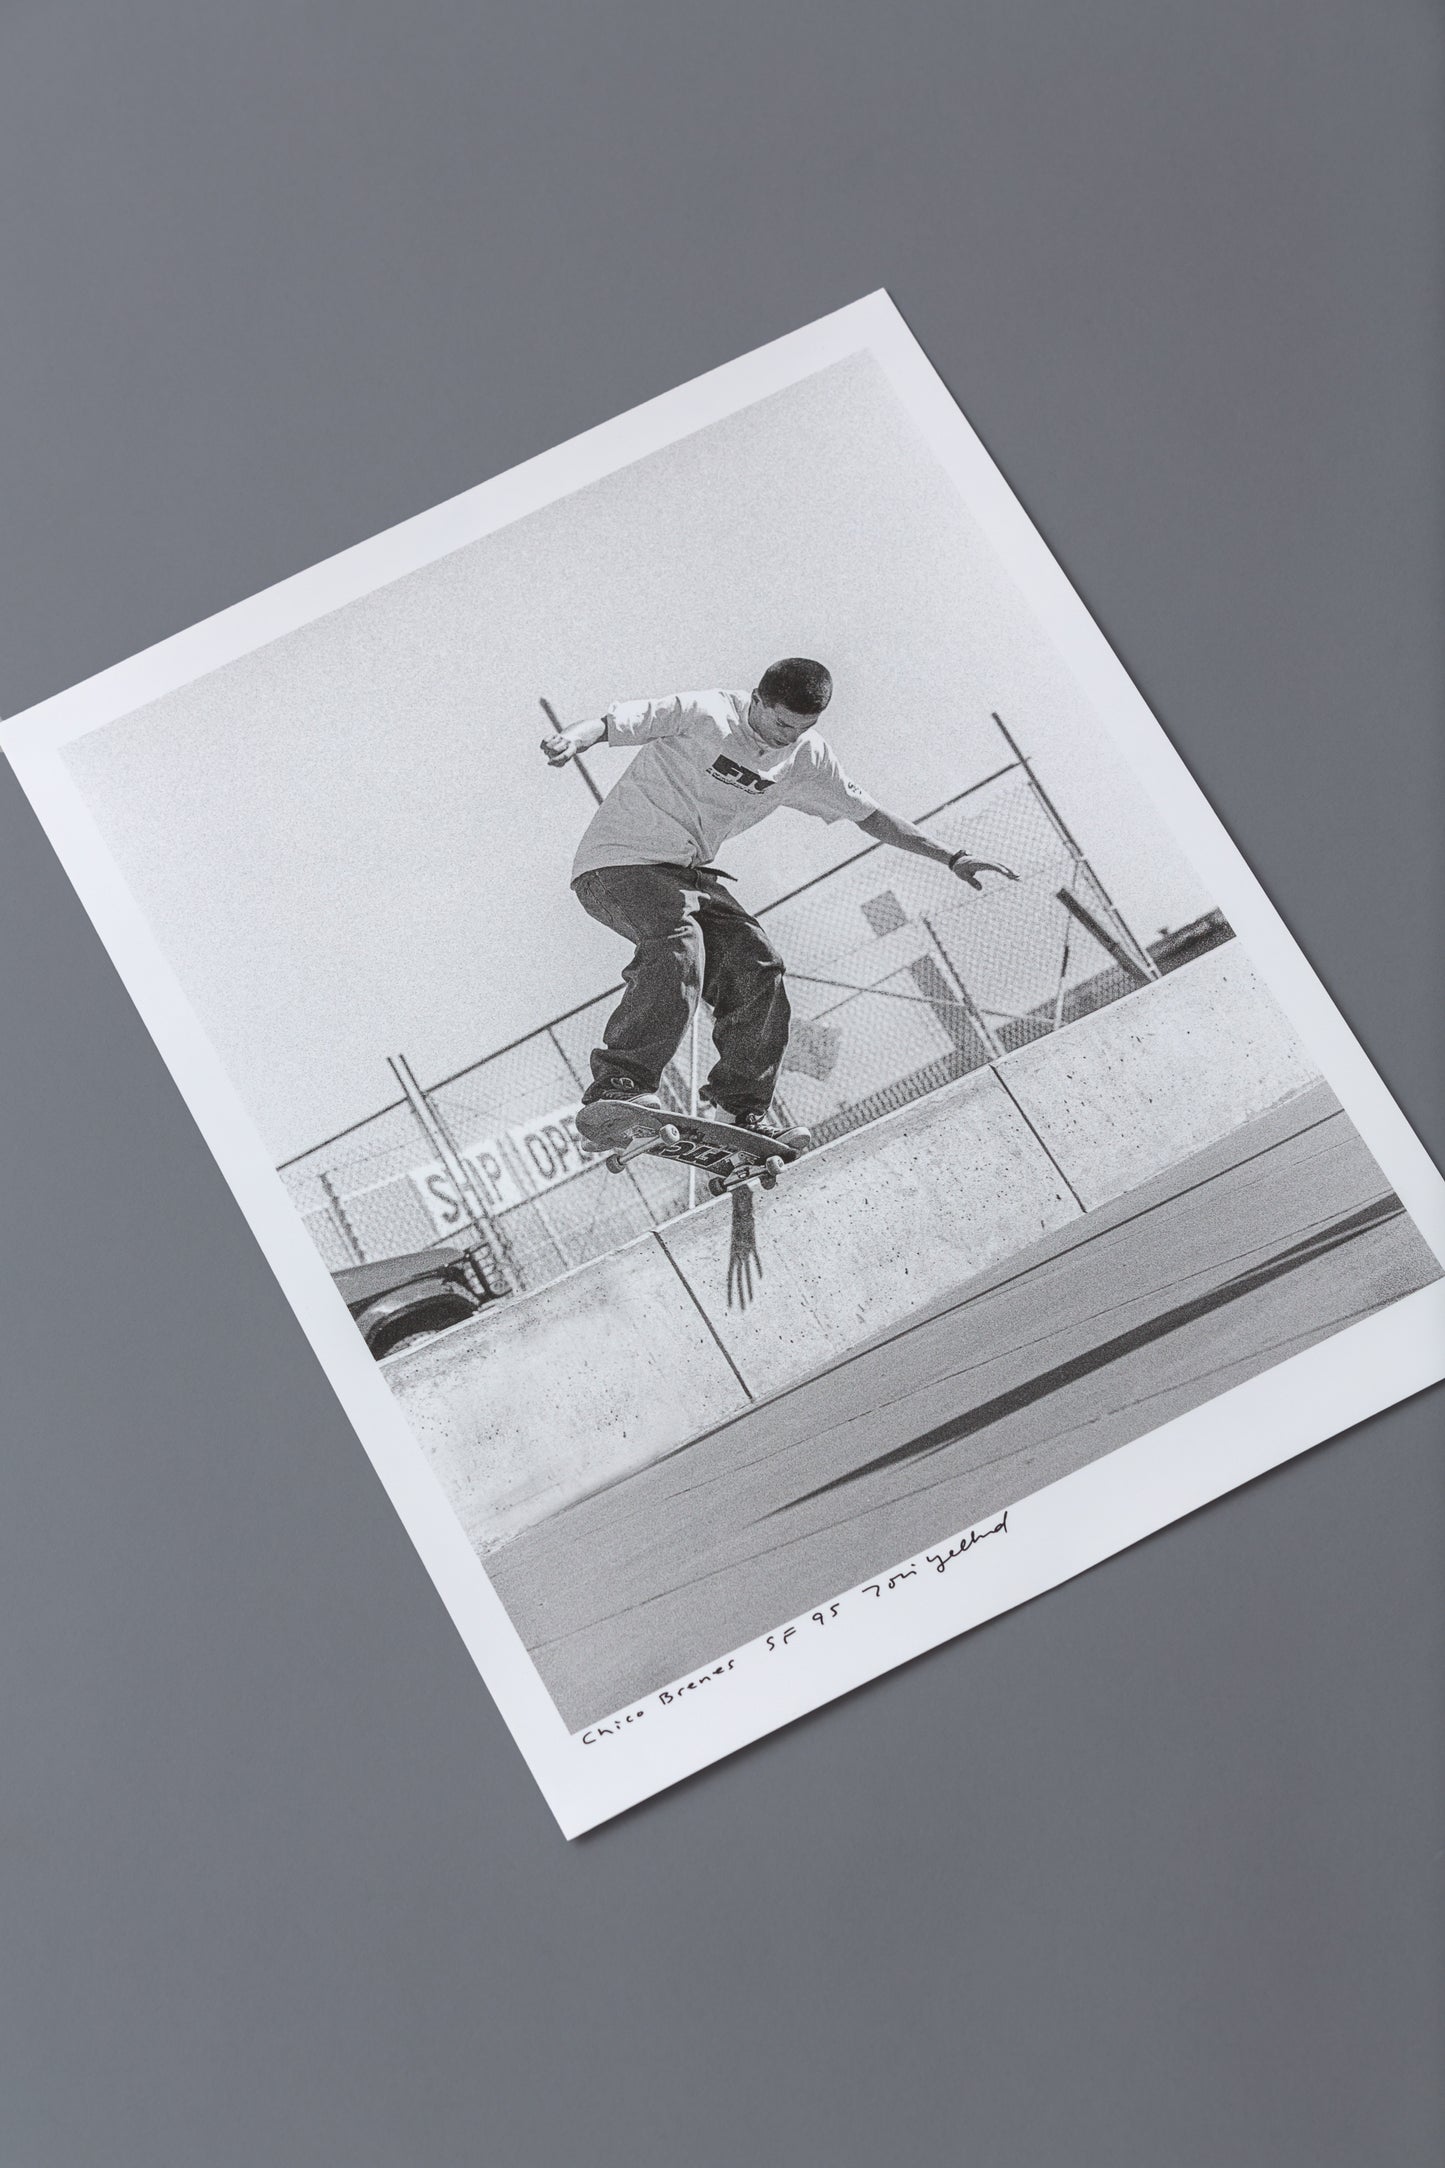 1995 Tobin Yelland x Chico Photo Deck and 11x4 Print